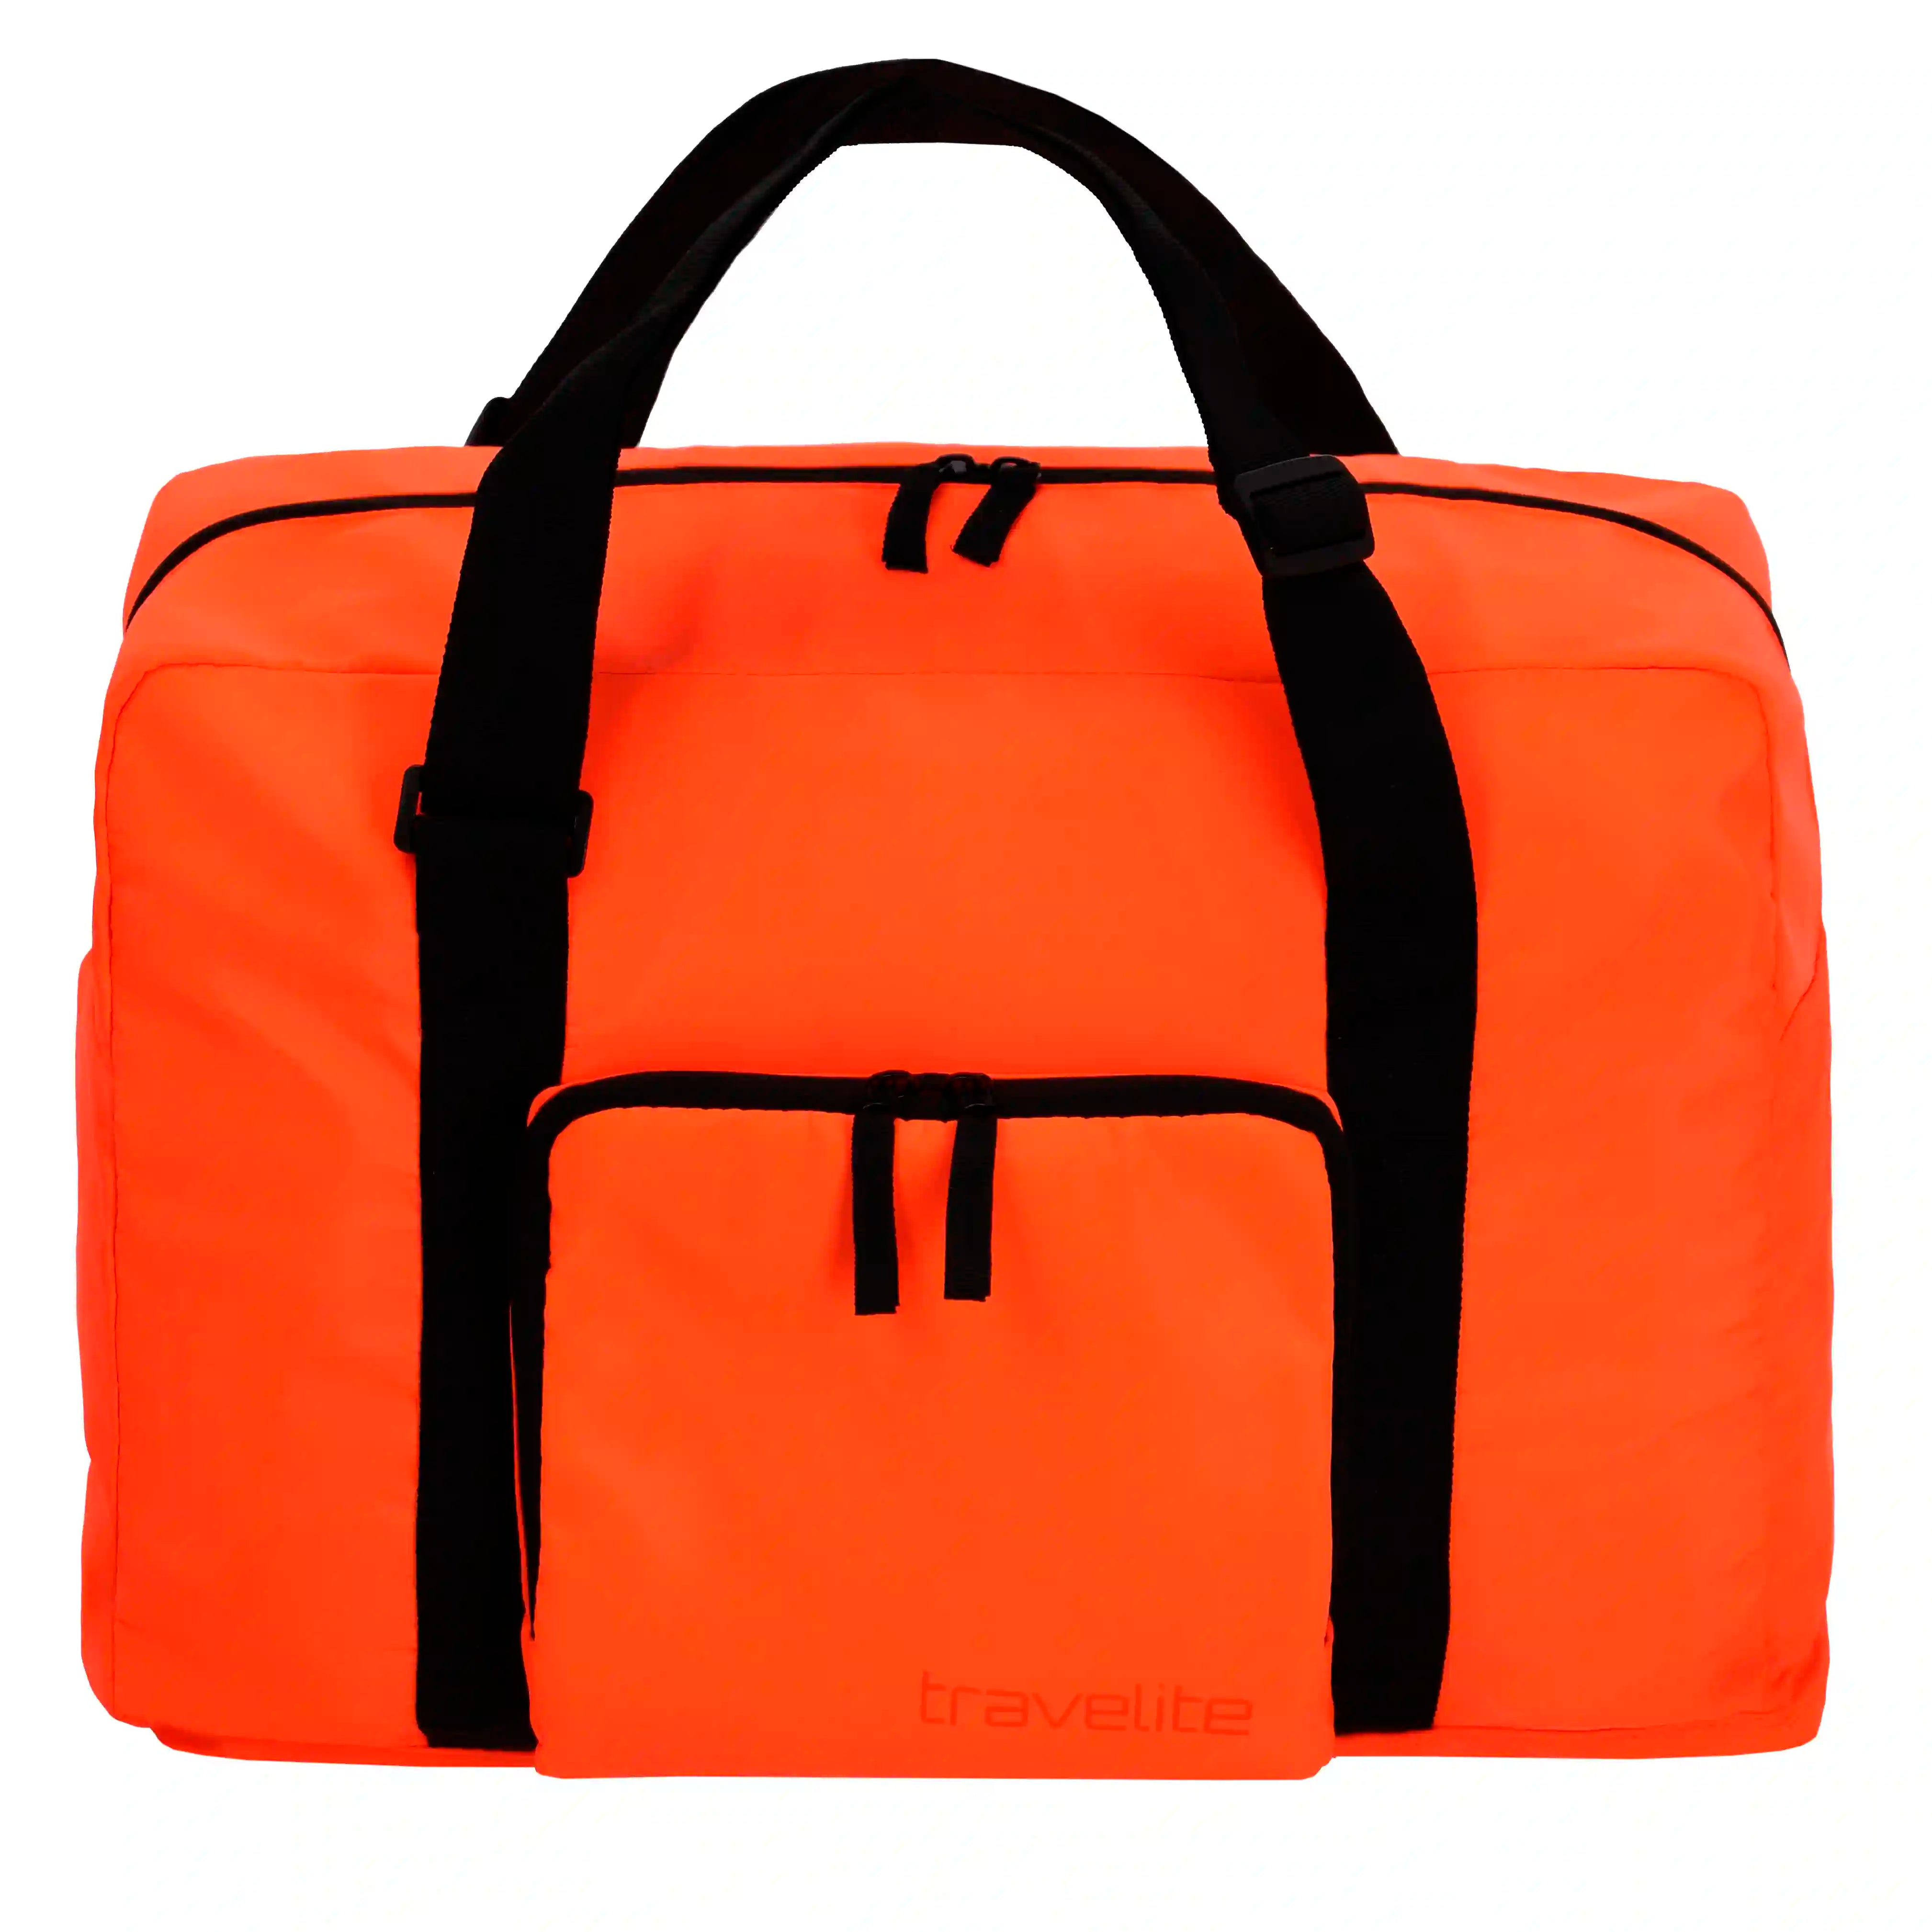 Travelite Accessories Folding Travel Bag 44 cm - Limone